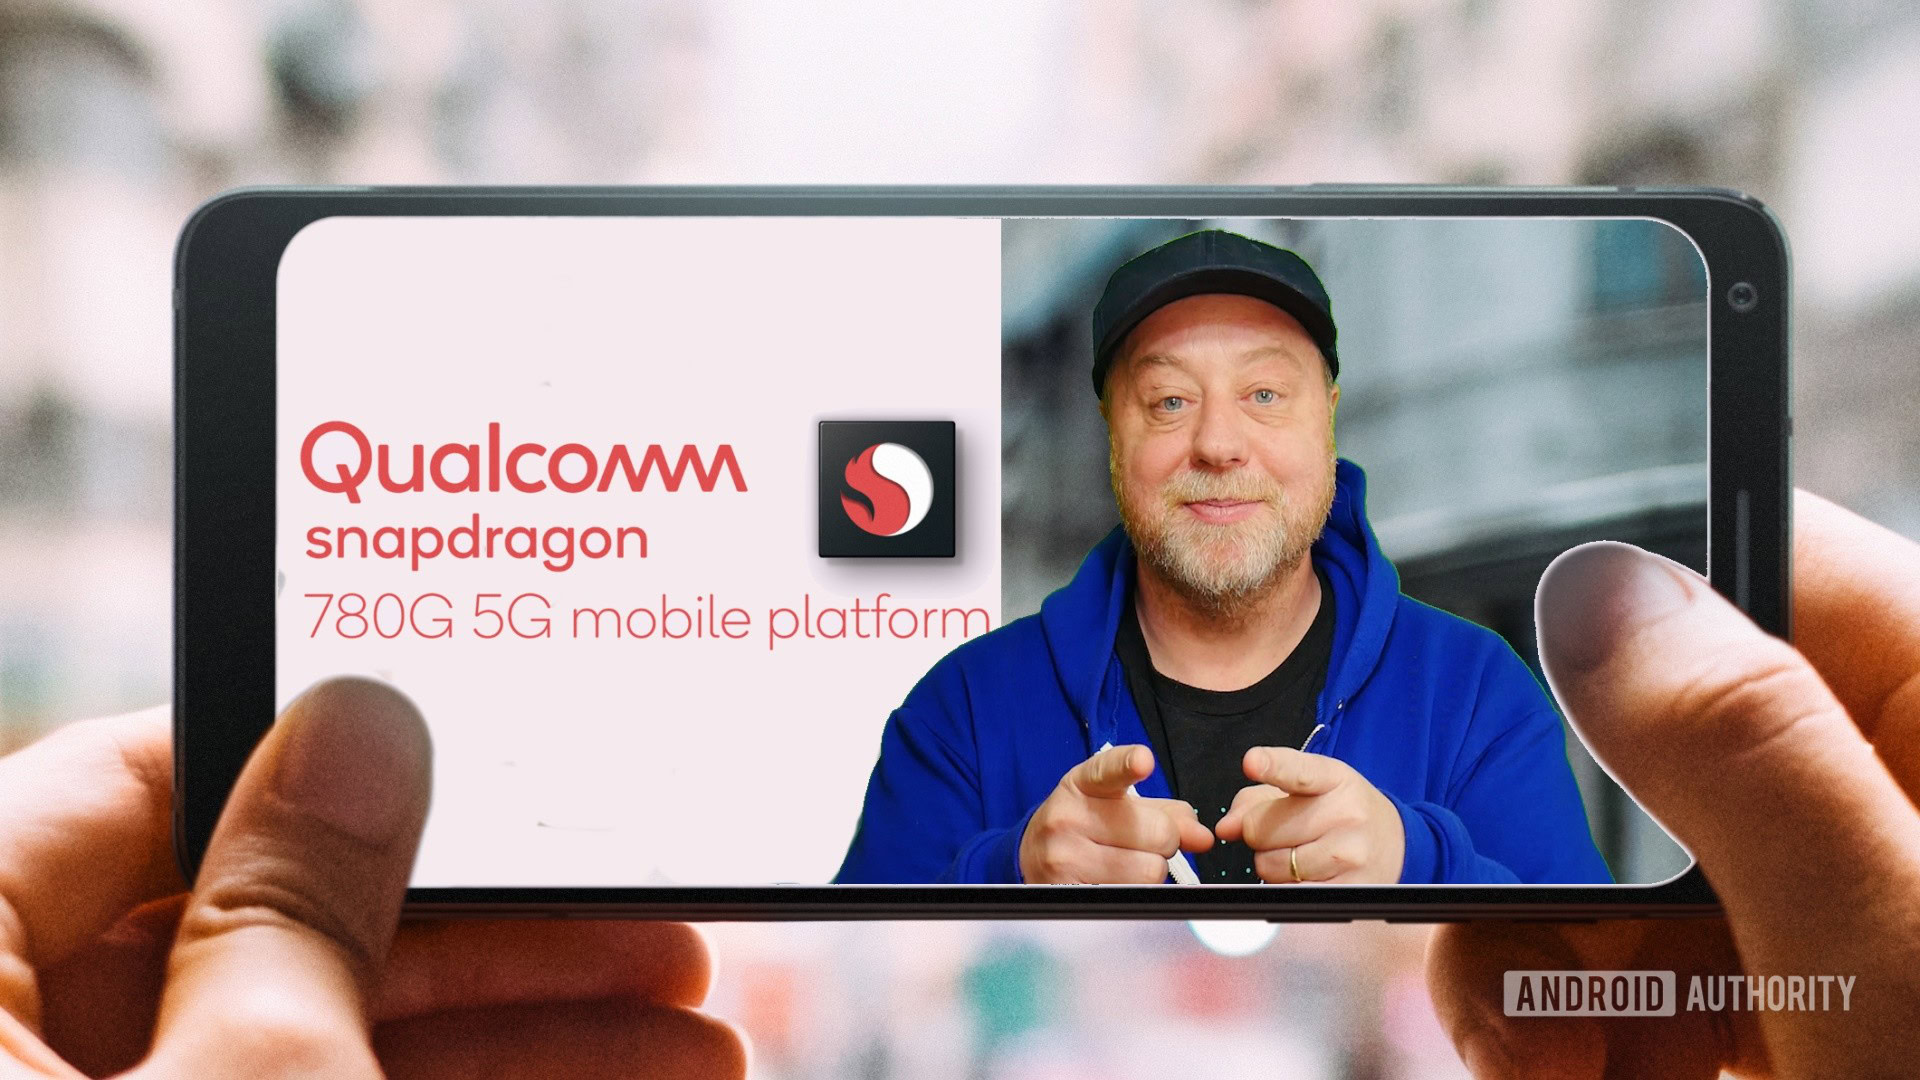 Gary Explains next to Snapdragon 780G logo